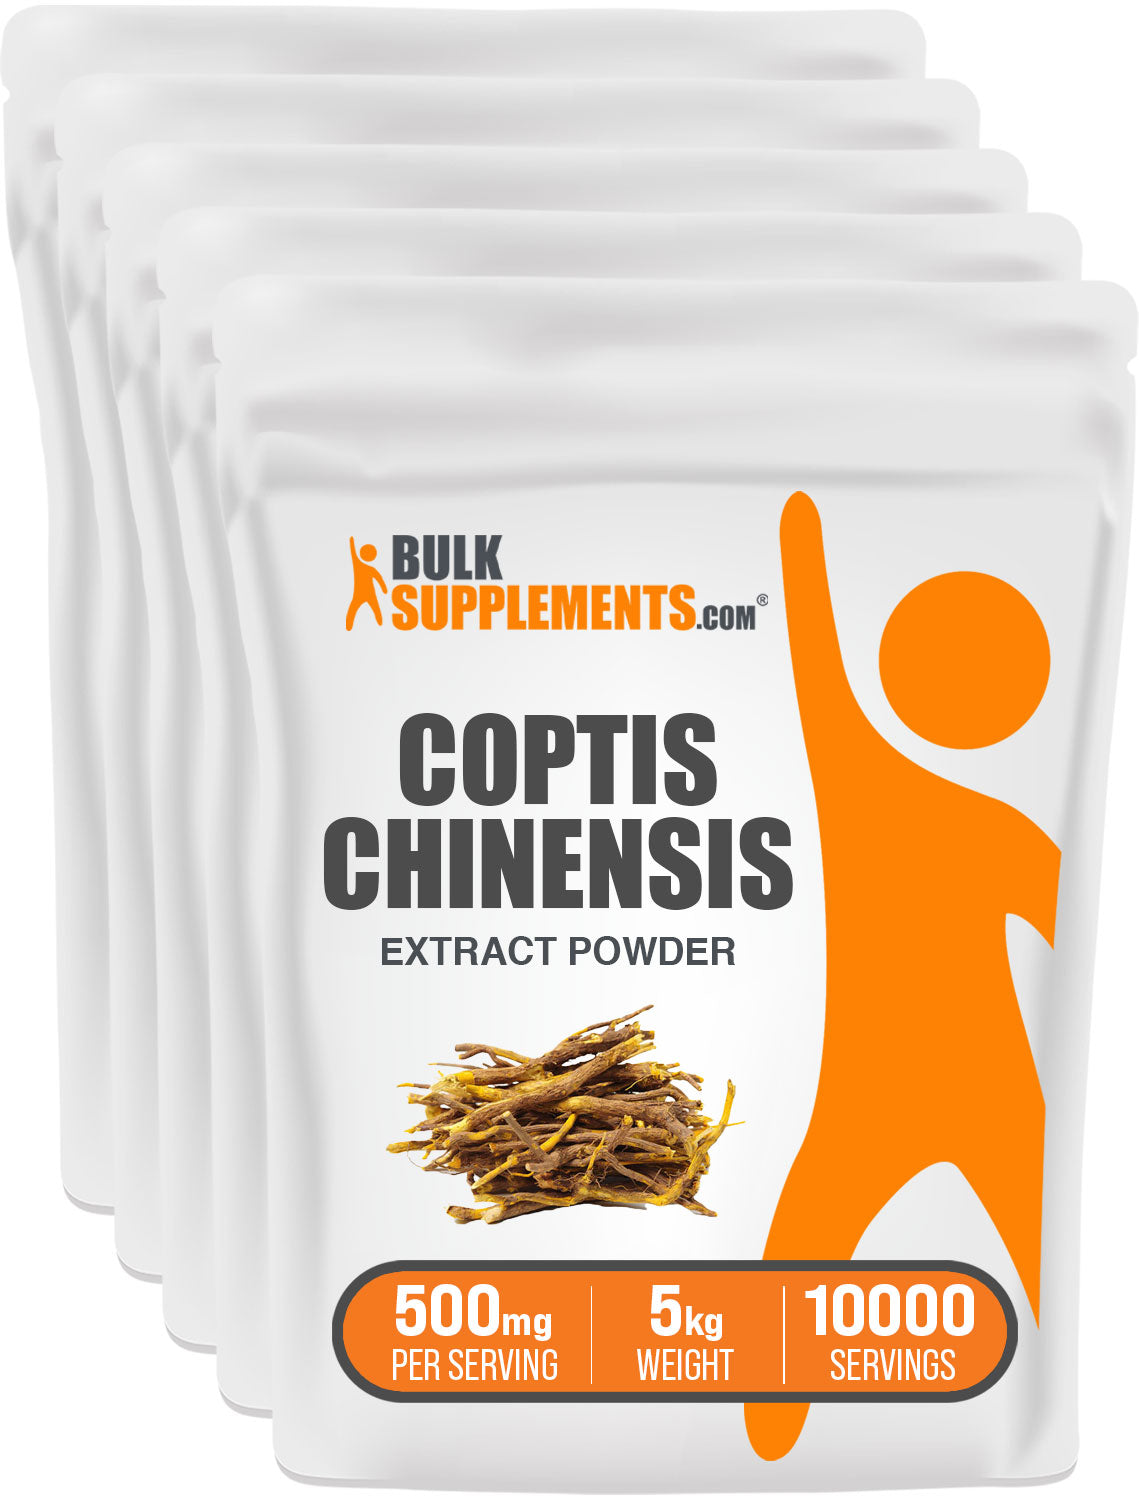 5kg of coptis chinensis